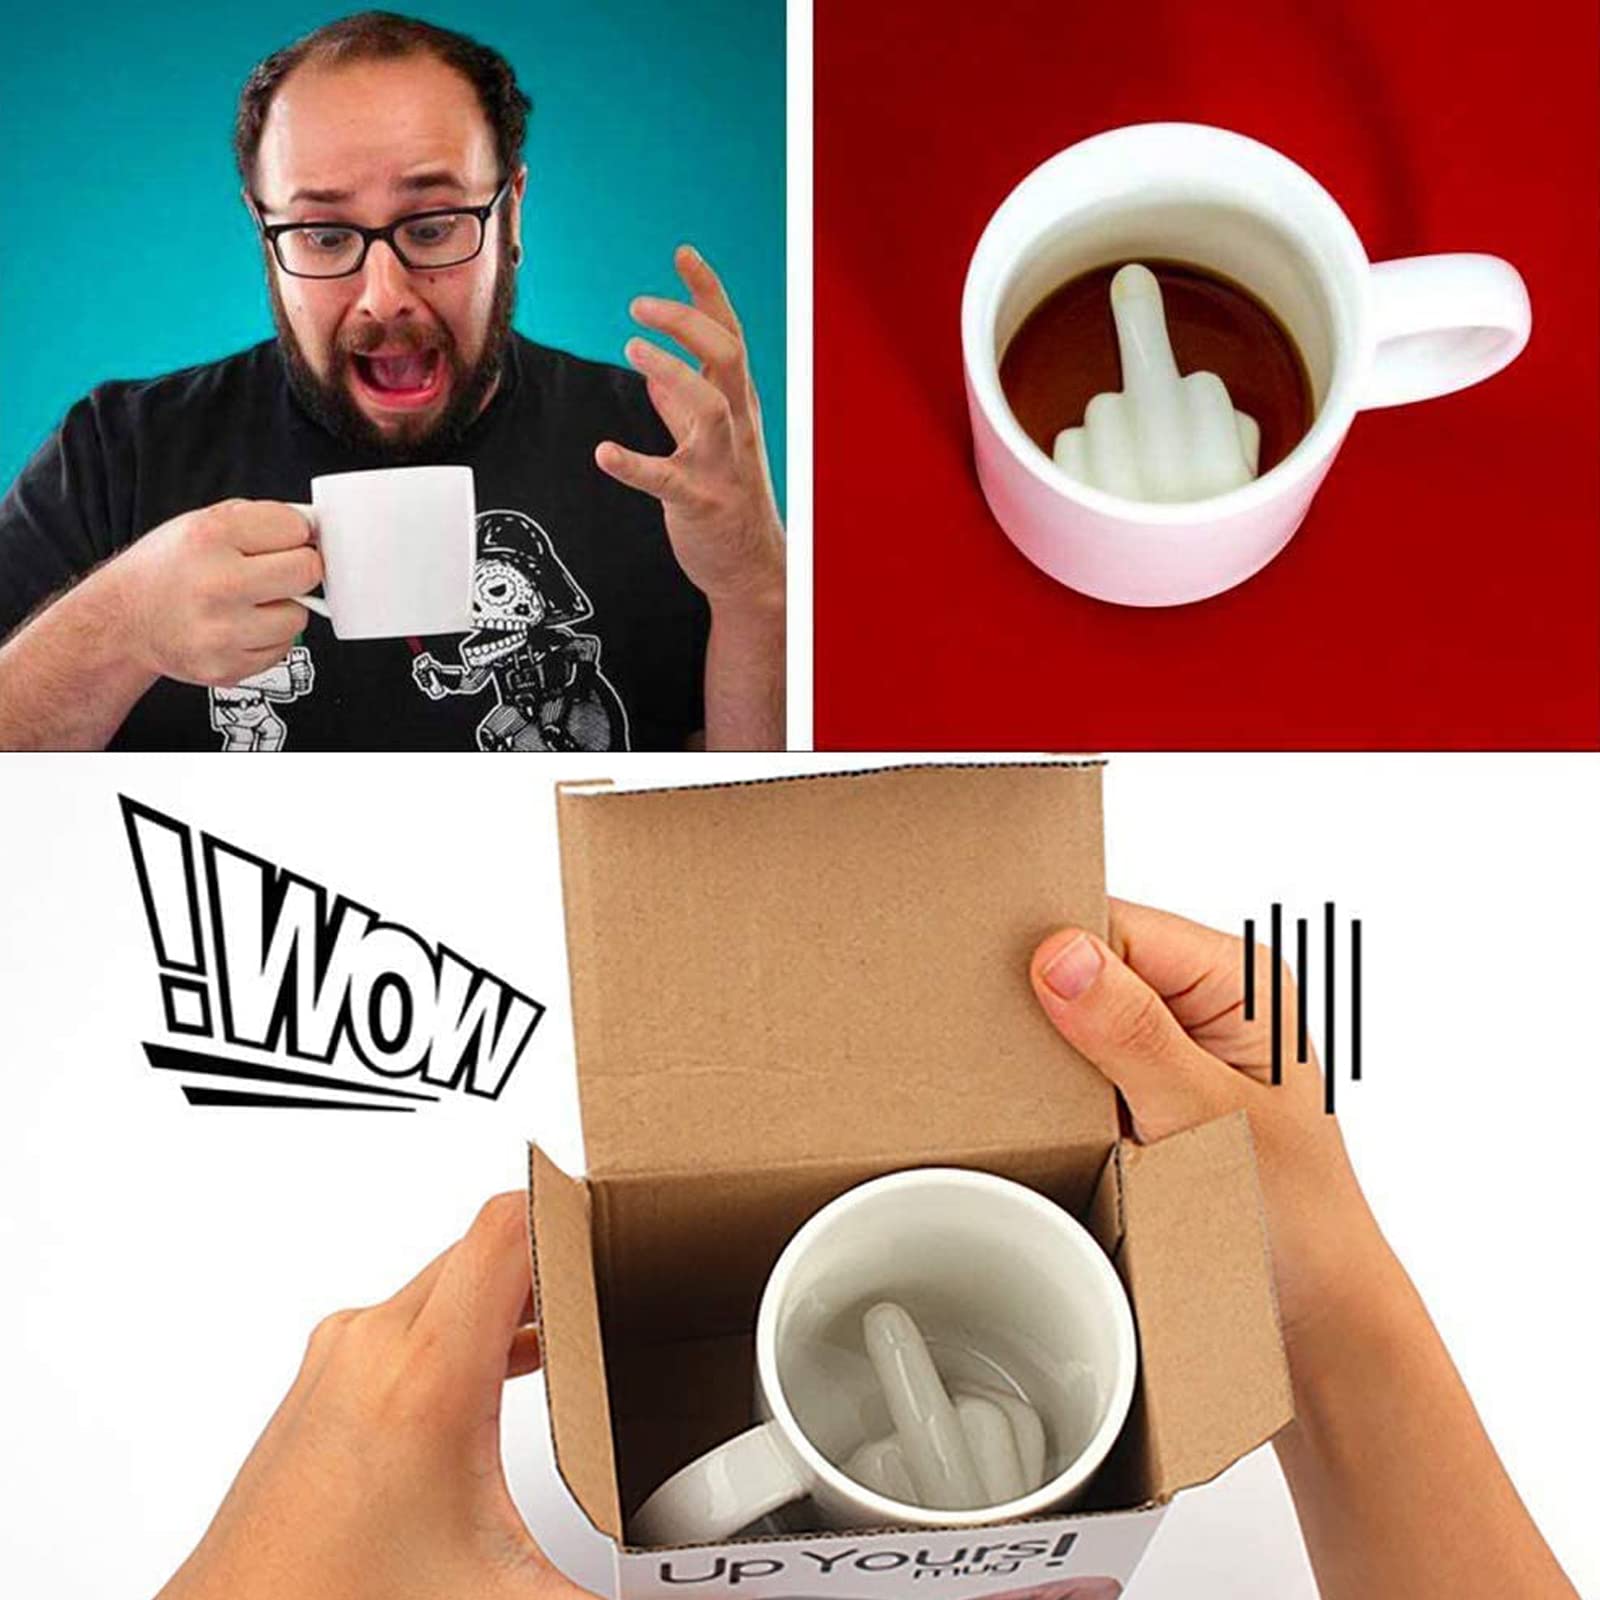 TNOIE Thumbs Up Ceramic Mug, 3D Funny Coffee Mug Middle Finger Inside Ceramic Cup, Novelty Prank Valentines Day Gift for Him Her Kids Boyfriend Girlfriend, 11 Oz